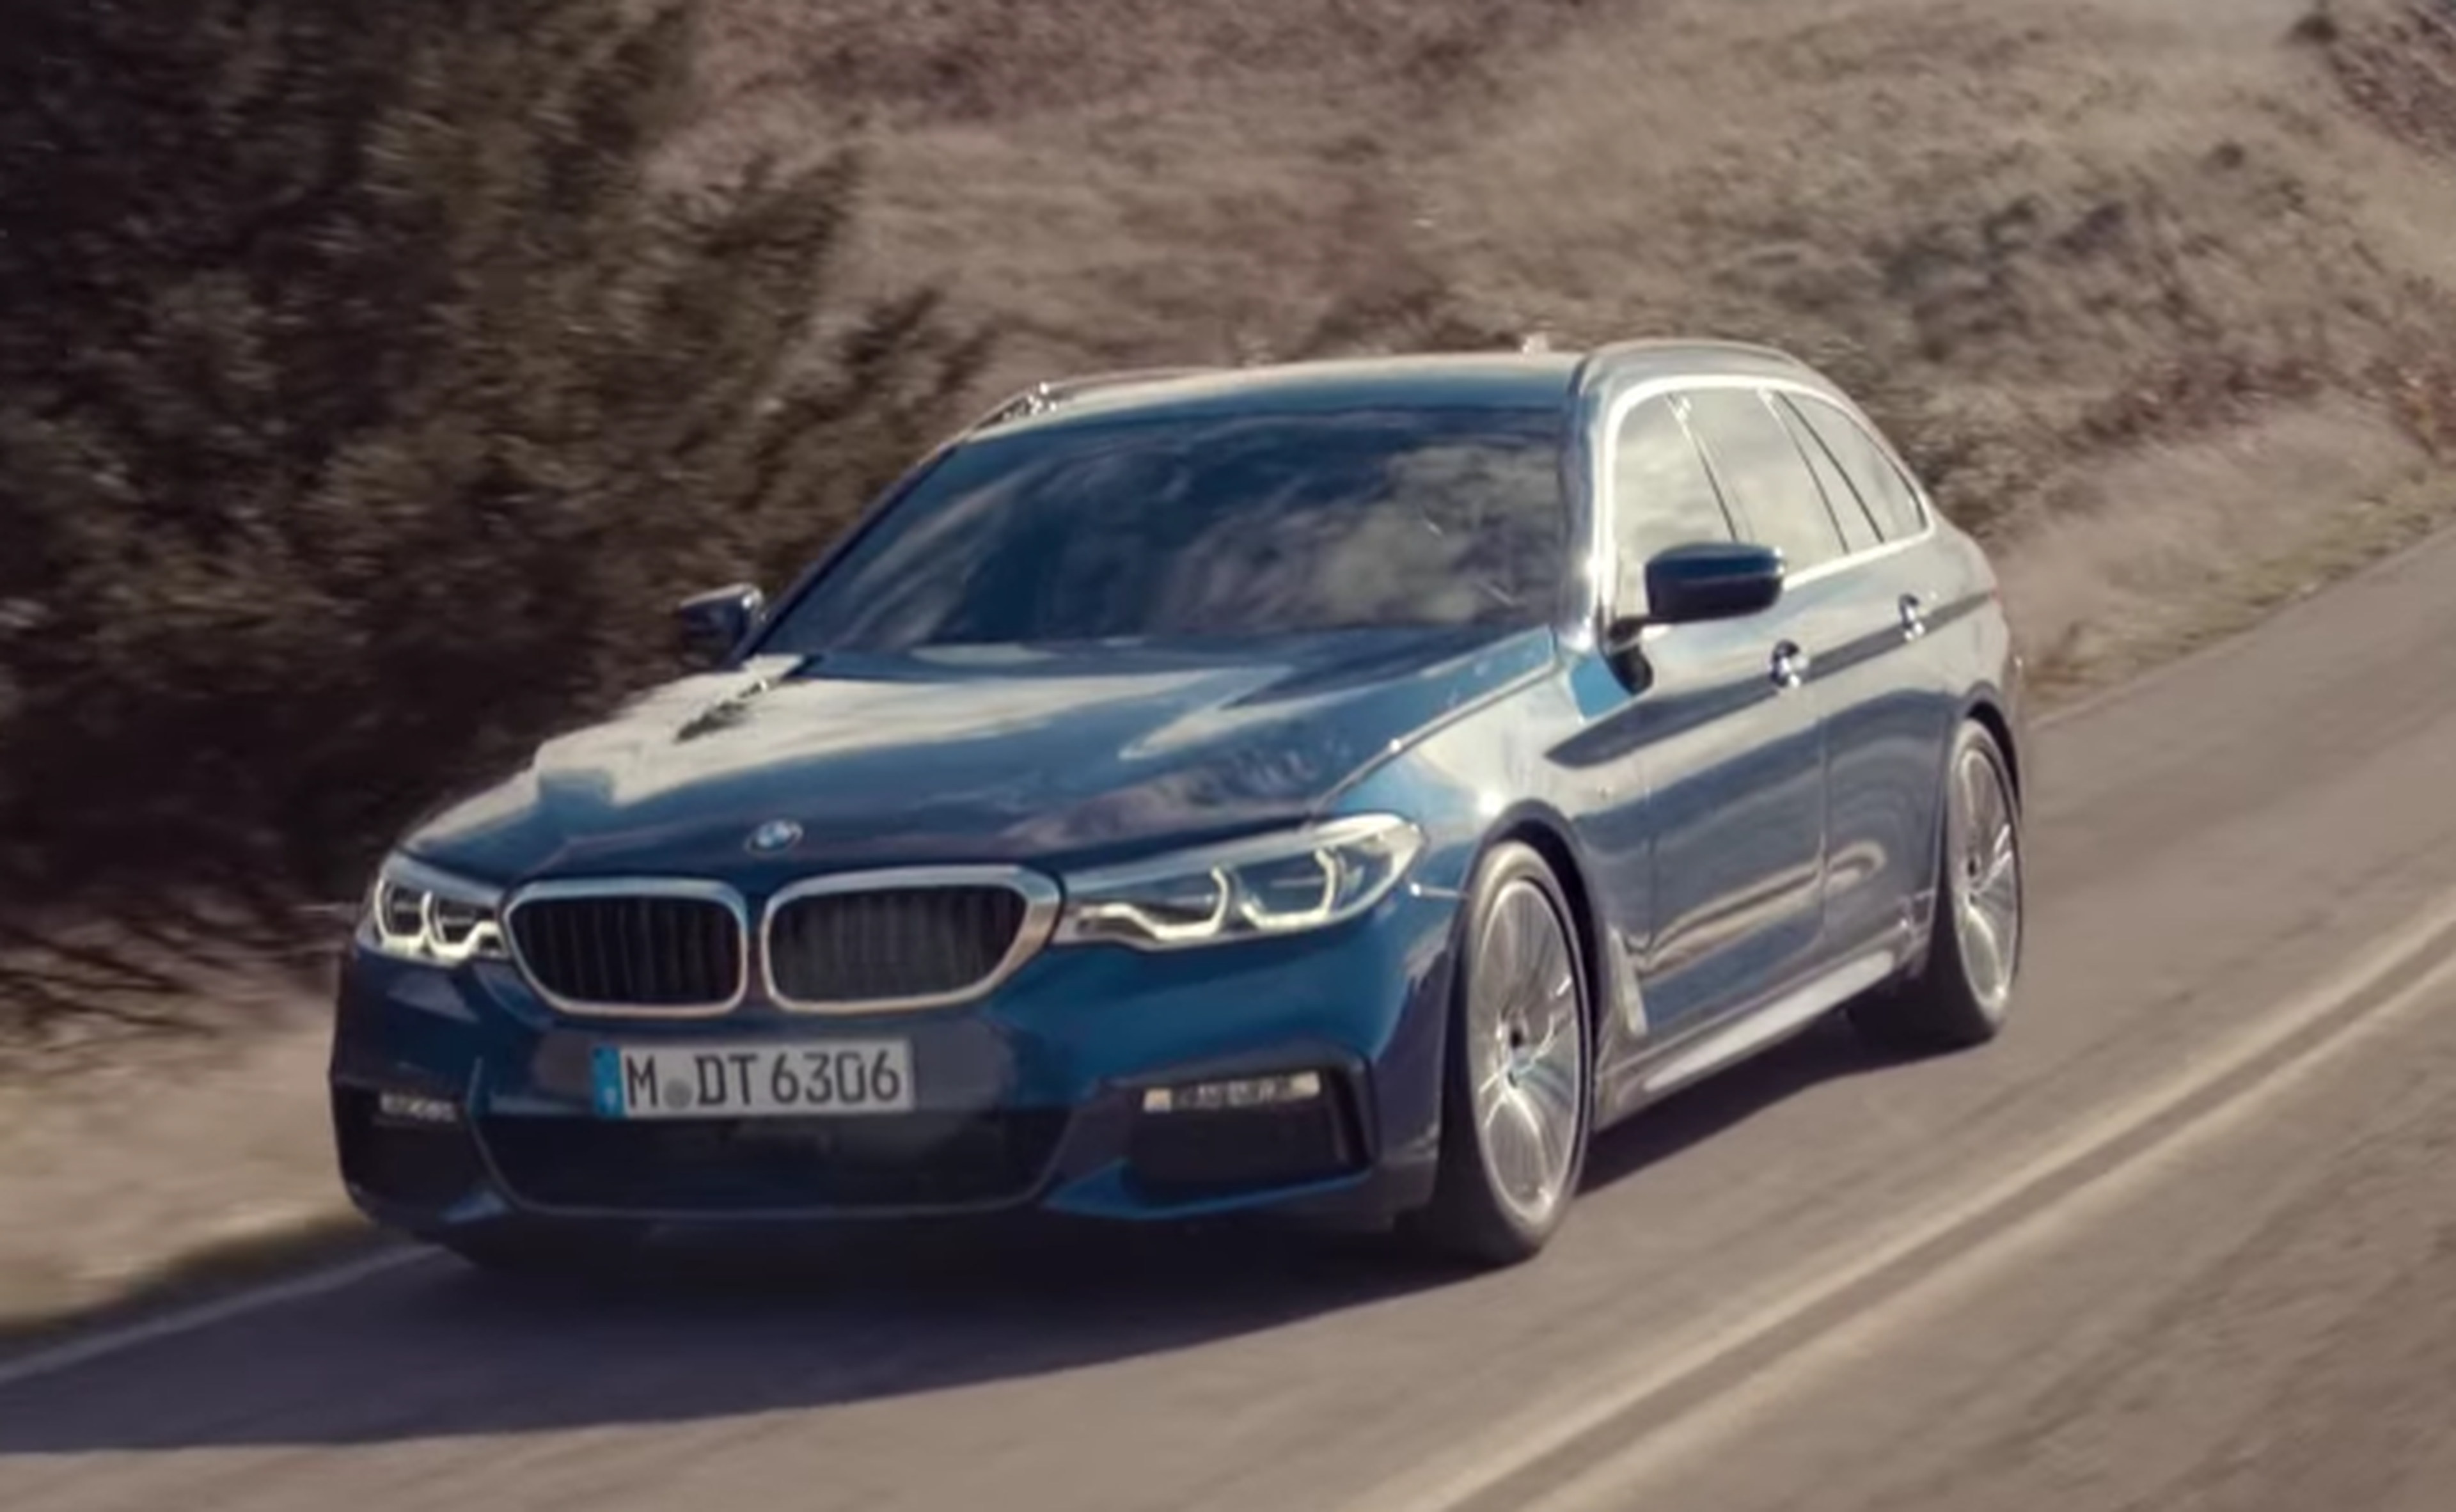 VÍDEO: Nuevo BMW Serie 5 Touring, ¡descubre sus características!